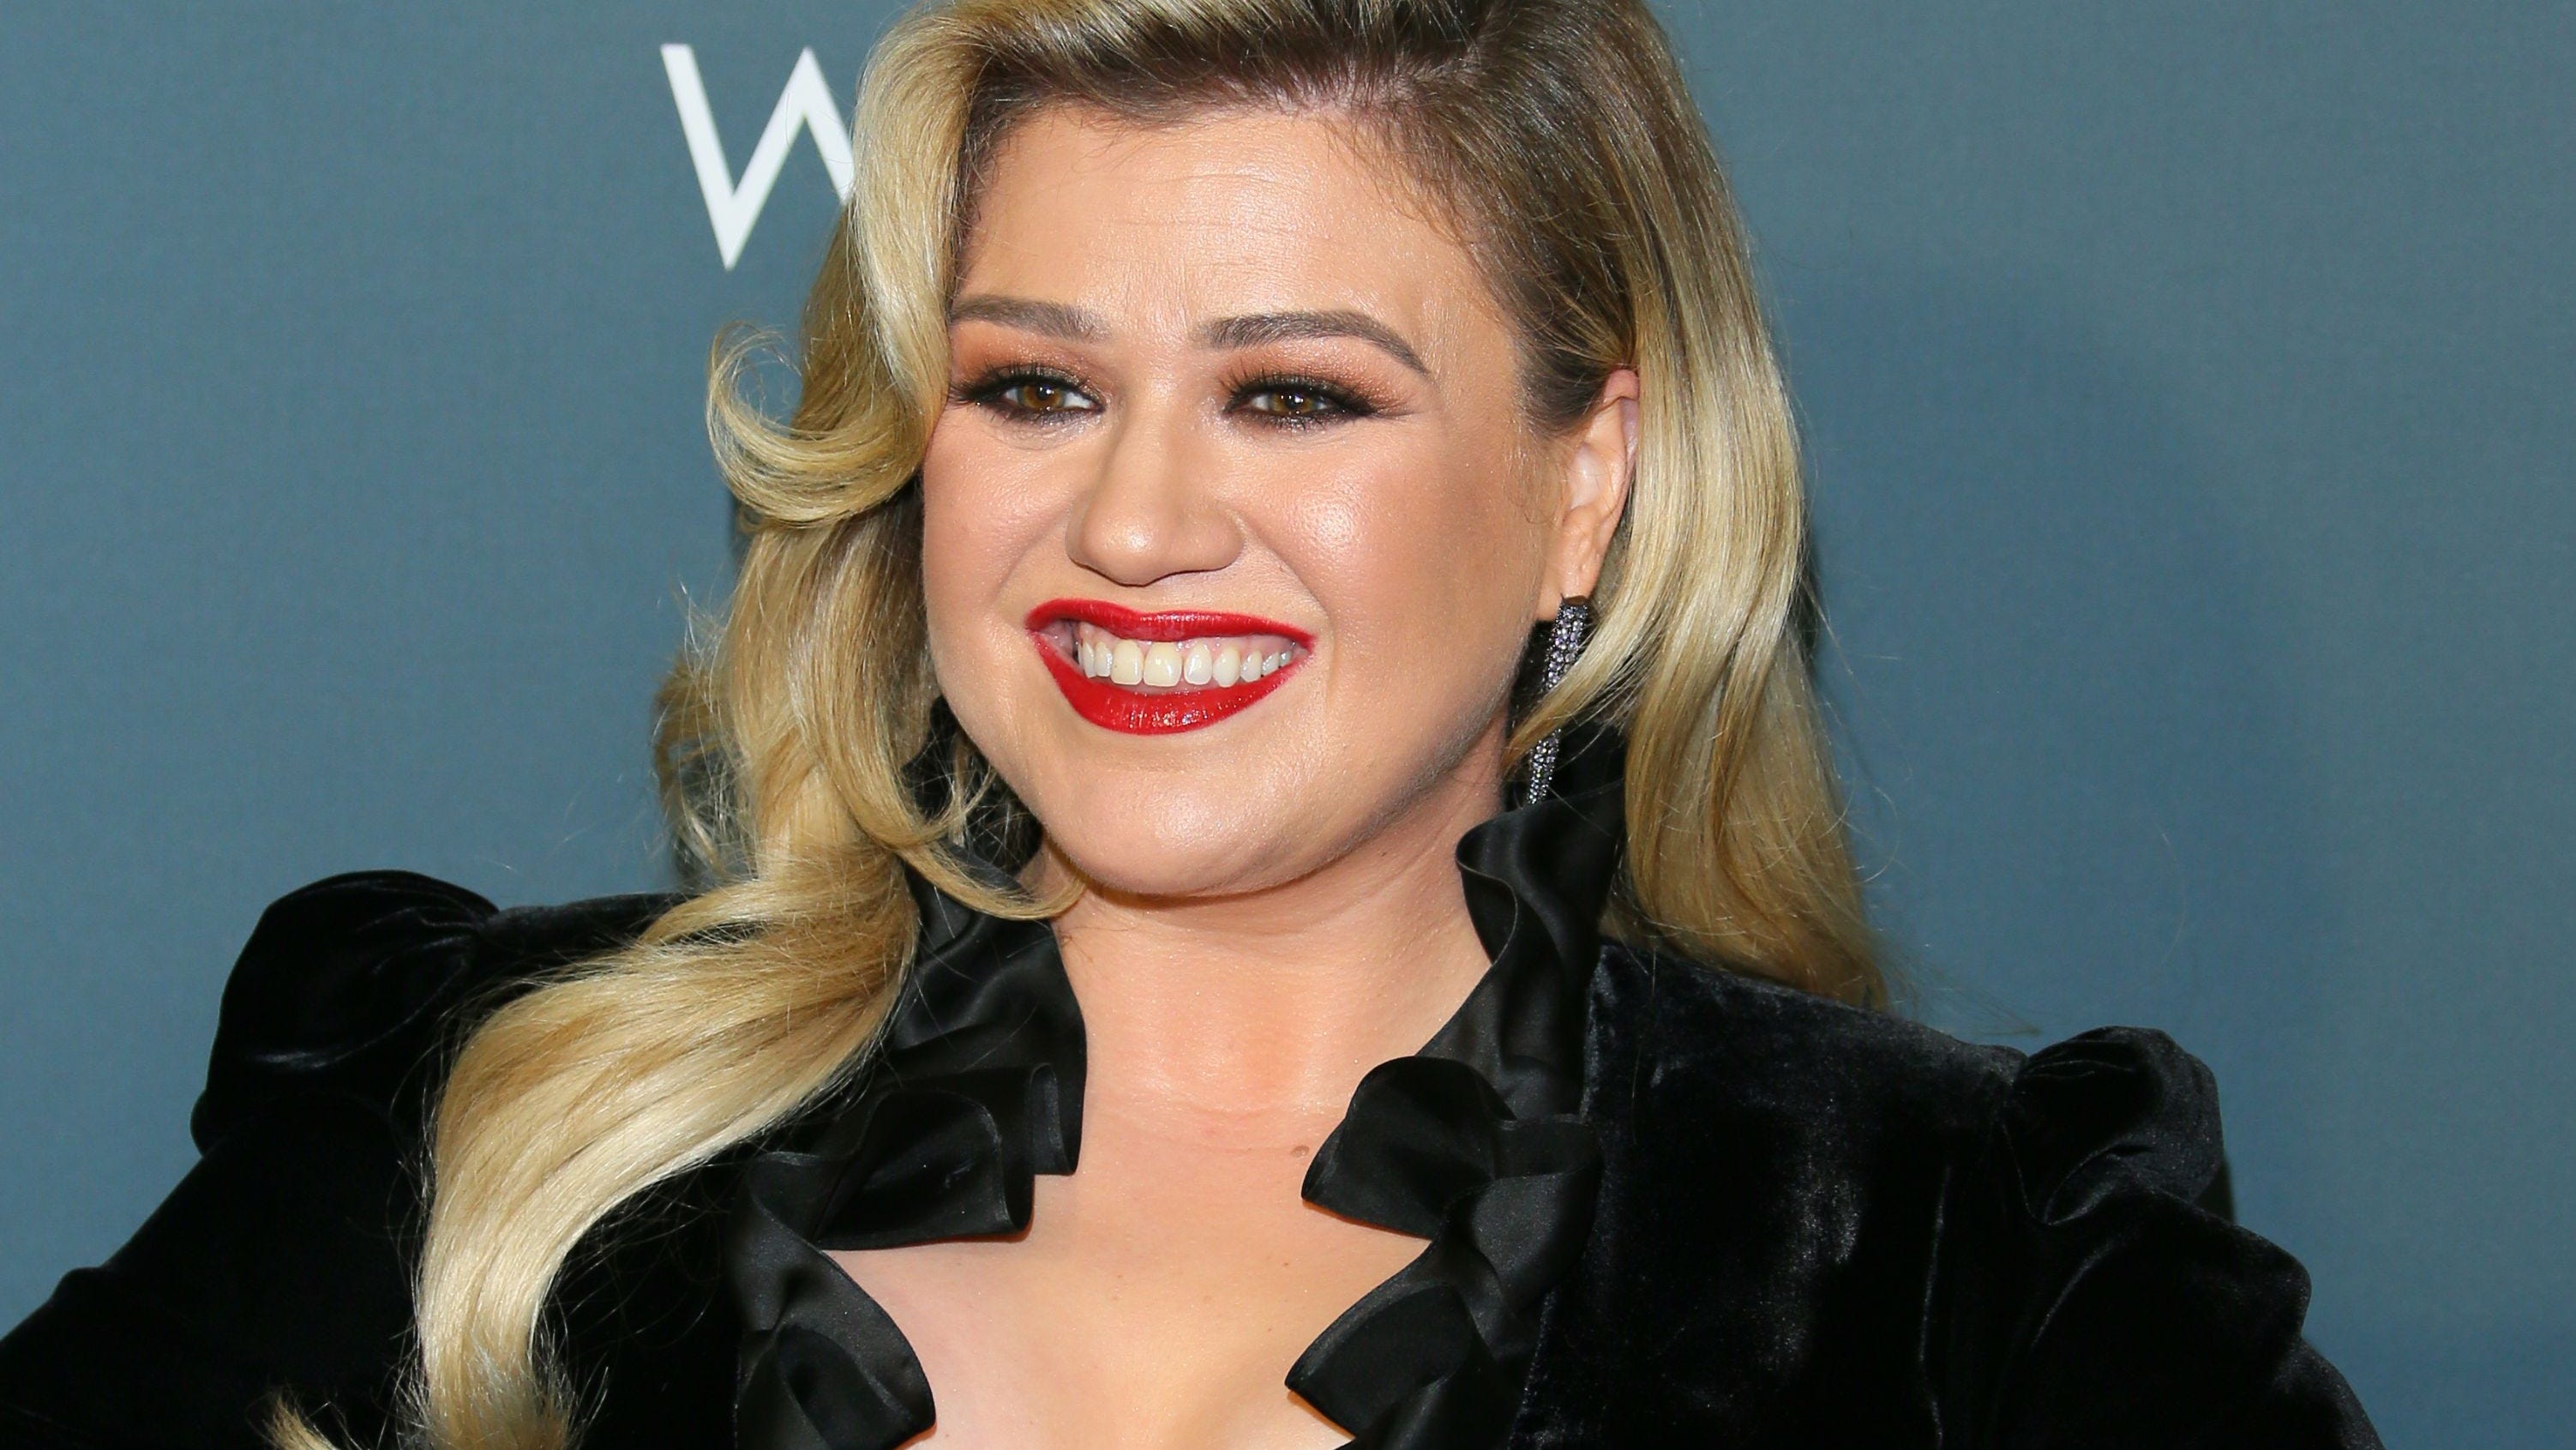 Kelly Clarkson returns to host the 2020 Billboard Music Awards